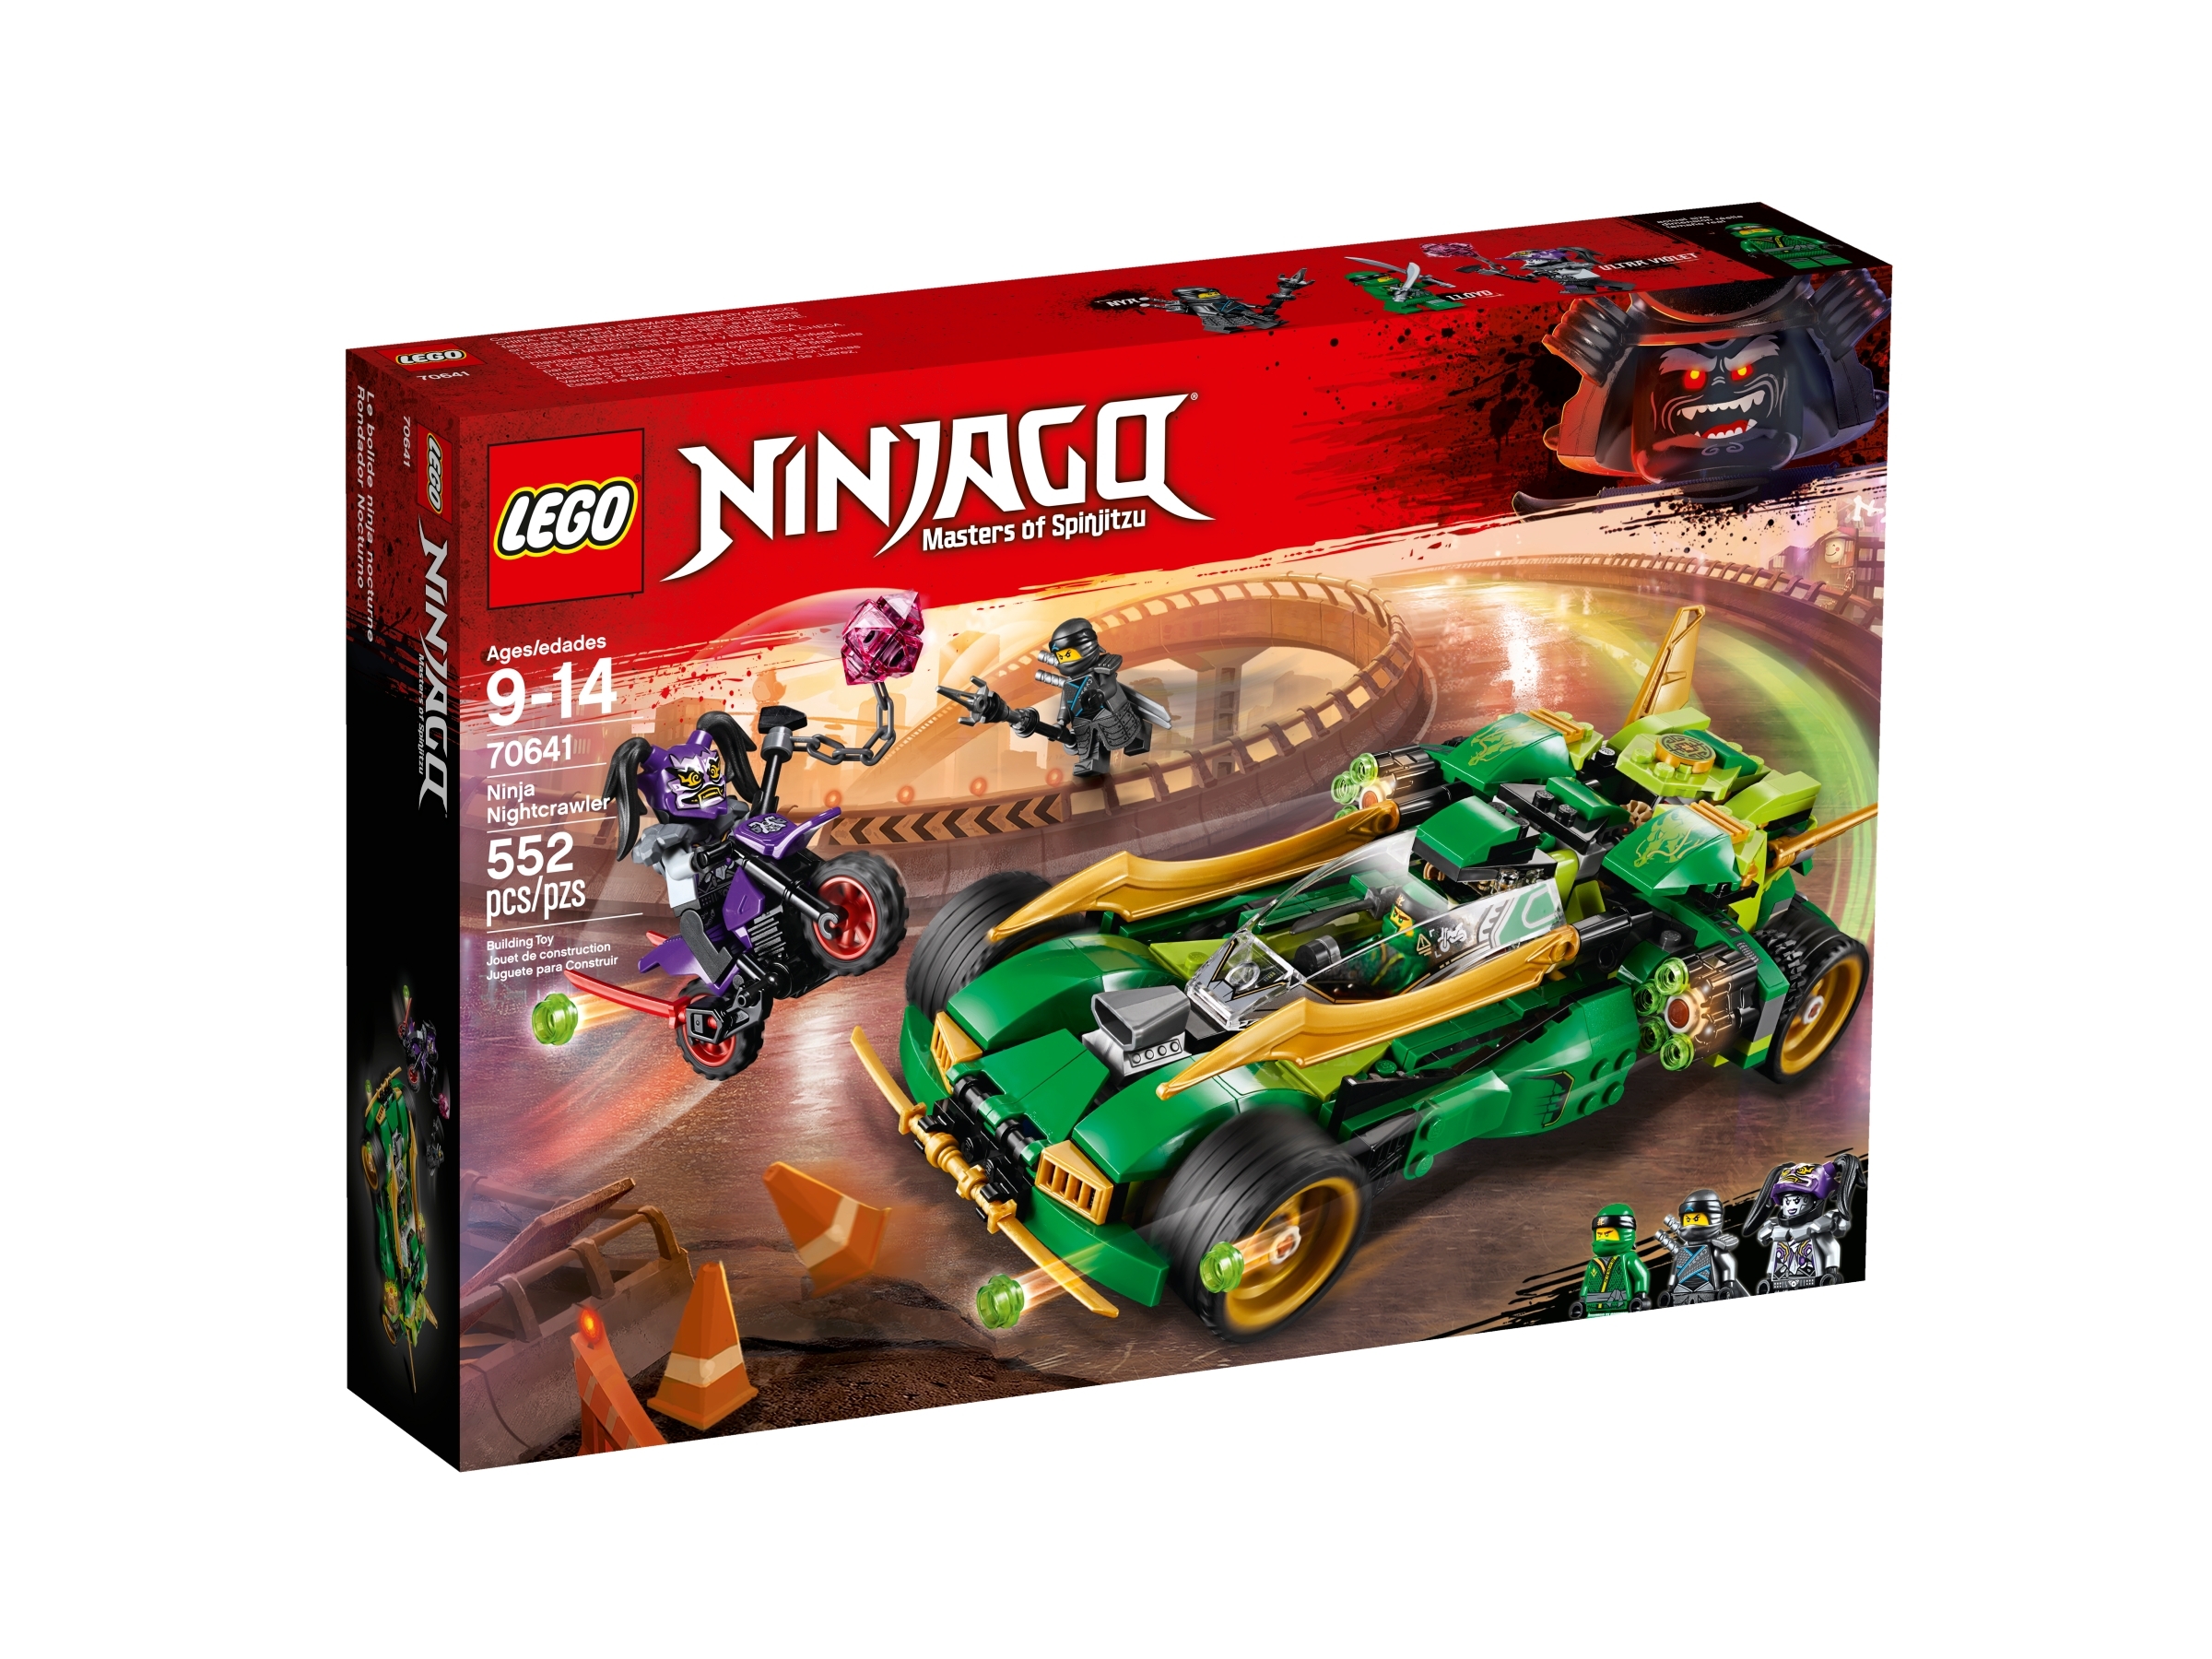 Lego Ninja Nightcrawler Building Set 70641552 piecesAges 9-14